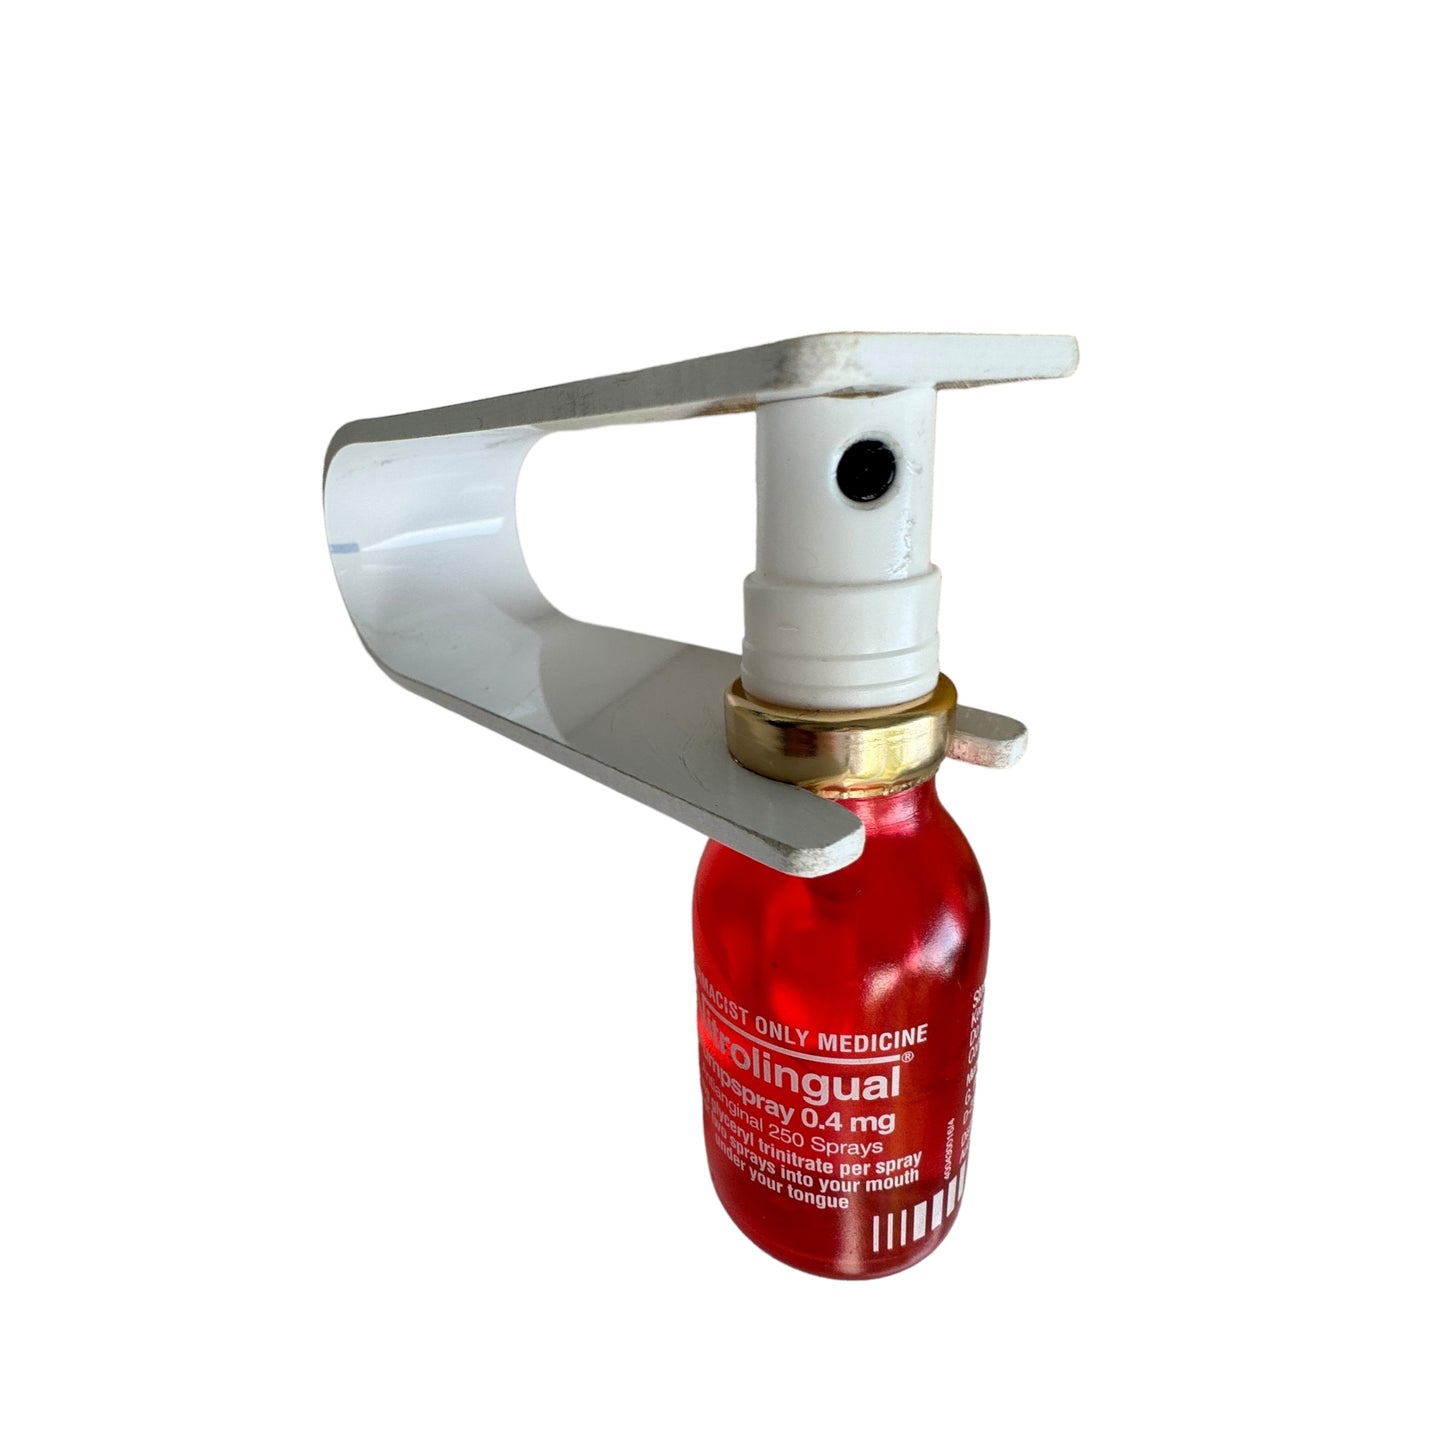 Nitrolingual Pump Spray Adapter